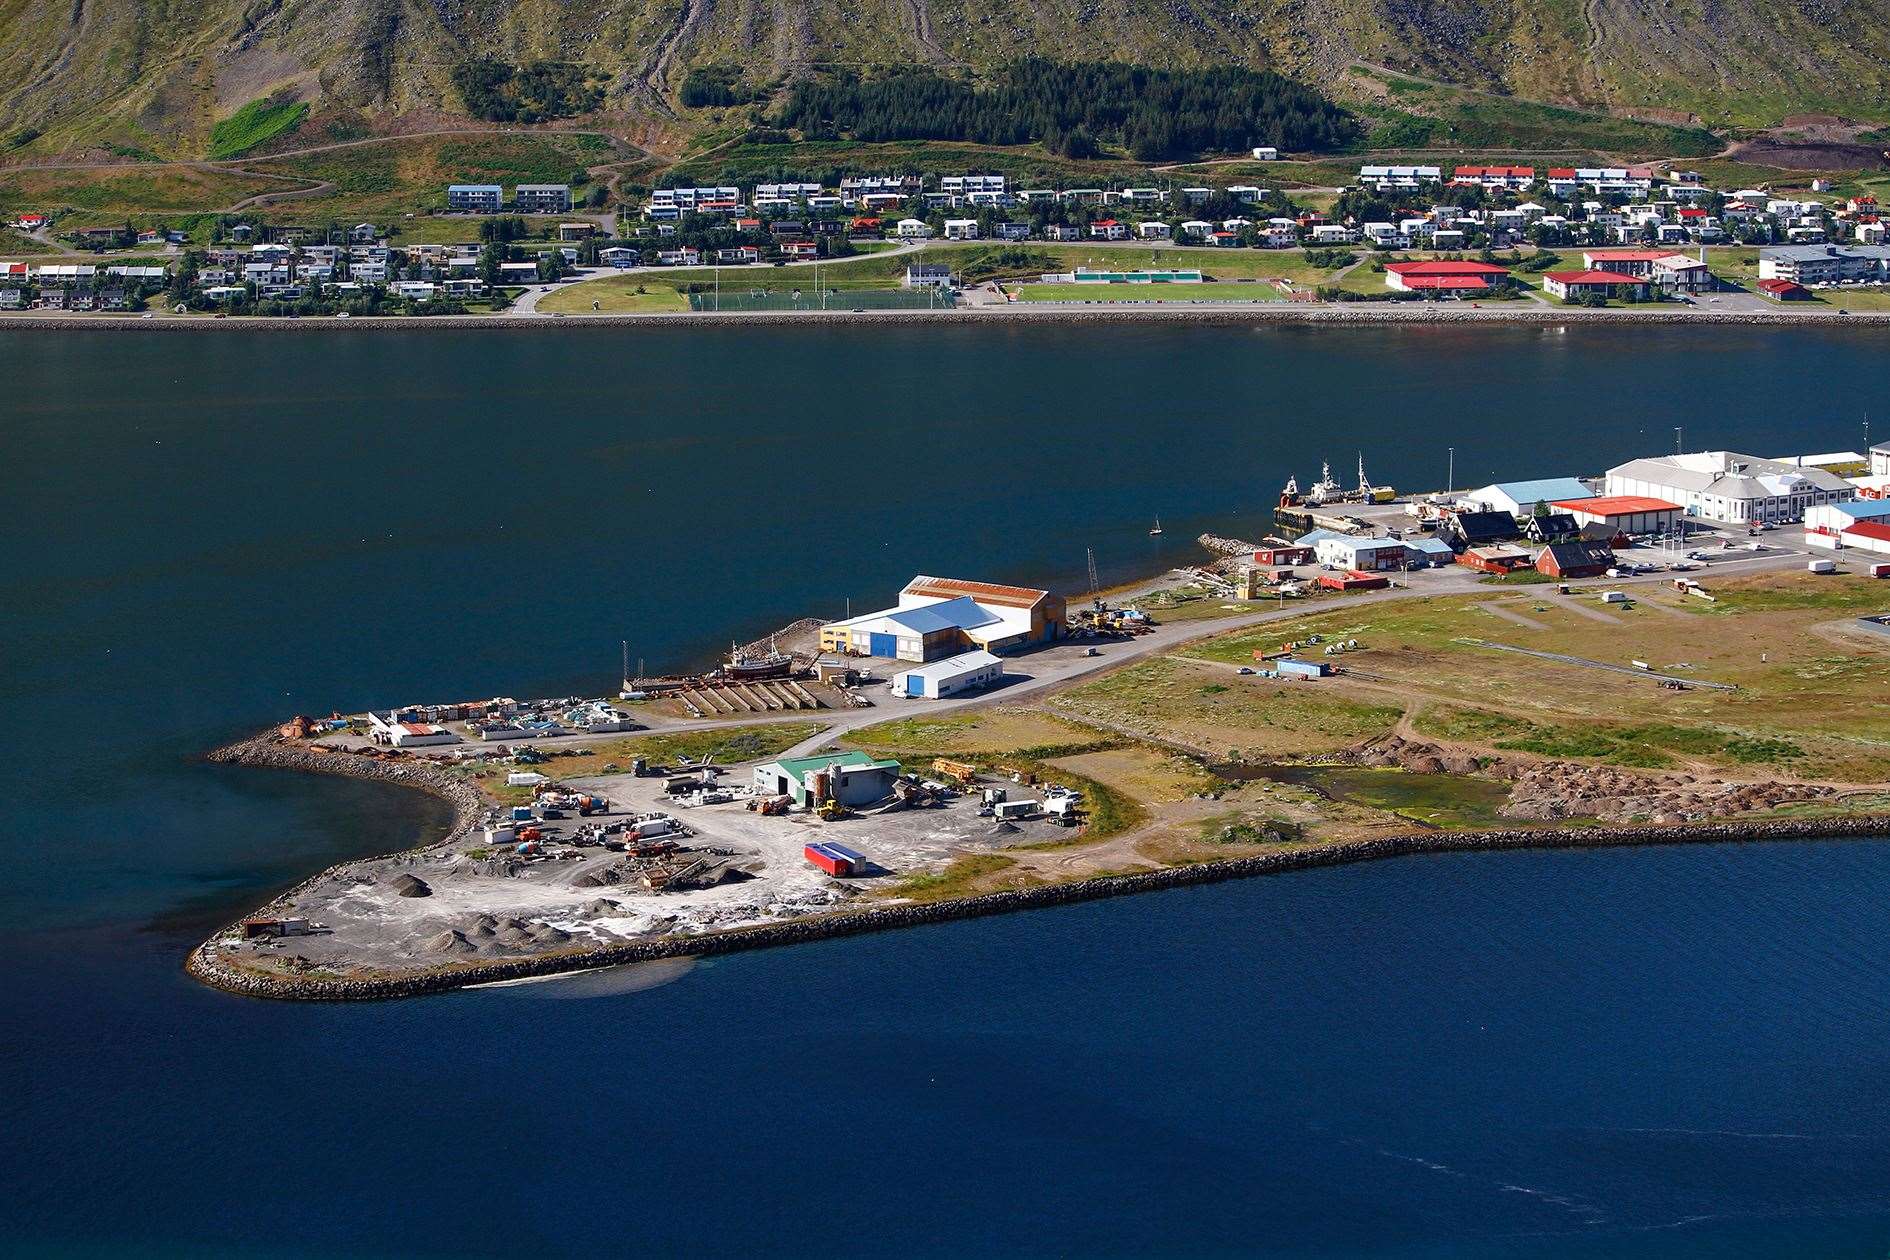 The town of Ísafjörður in Iceland, where Magnus is currently based.